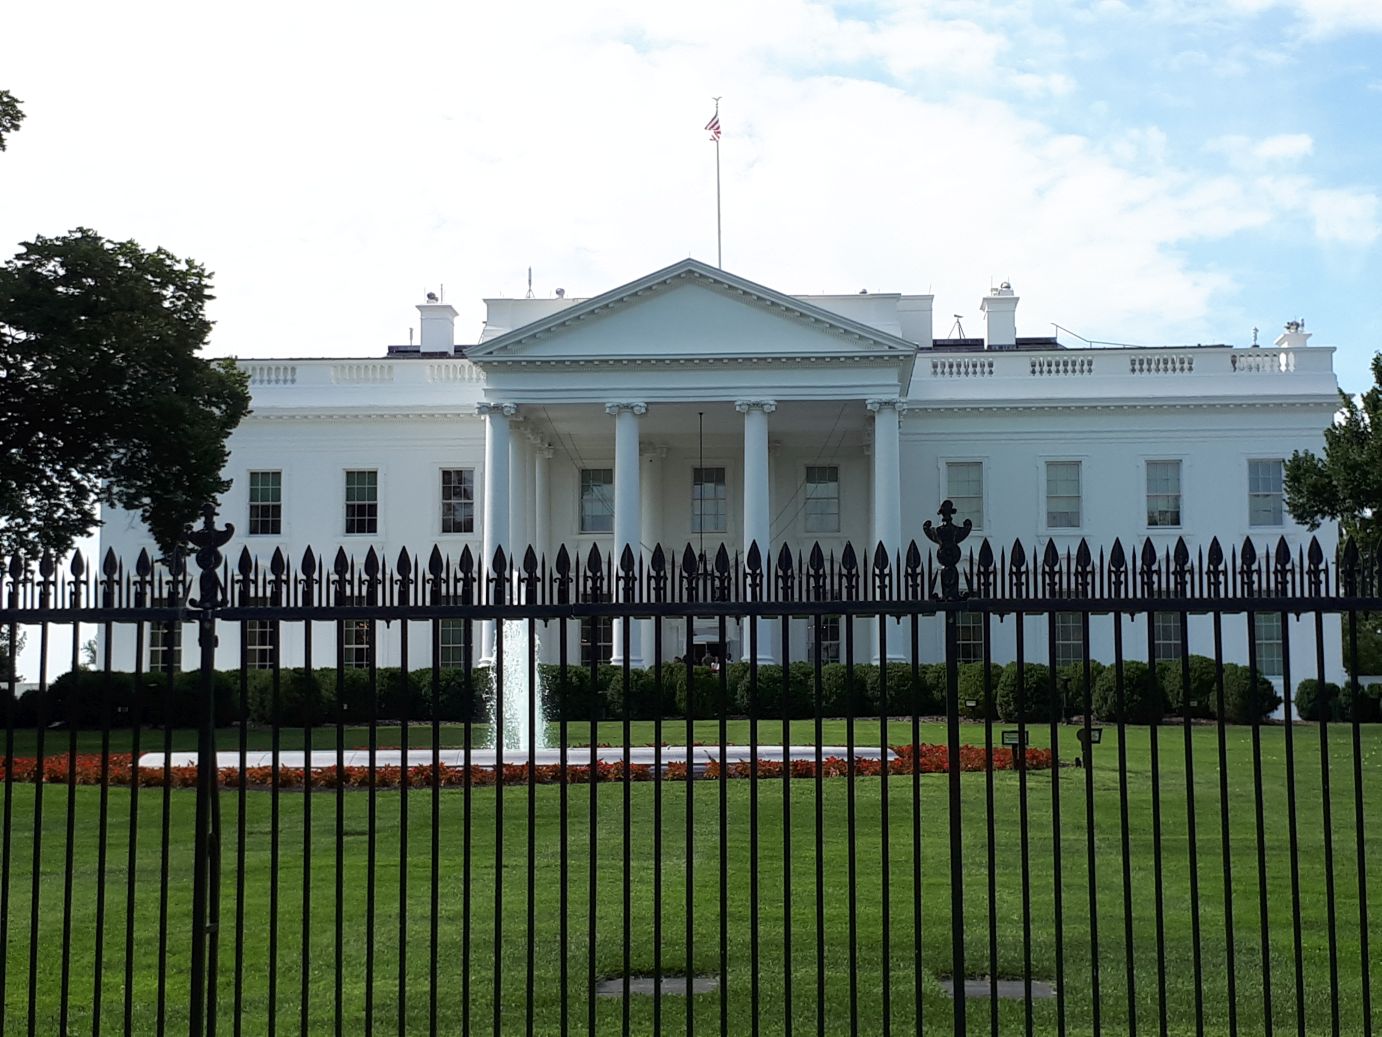 Image of the White House in Washington